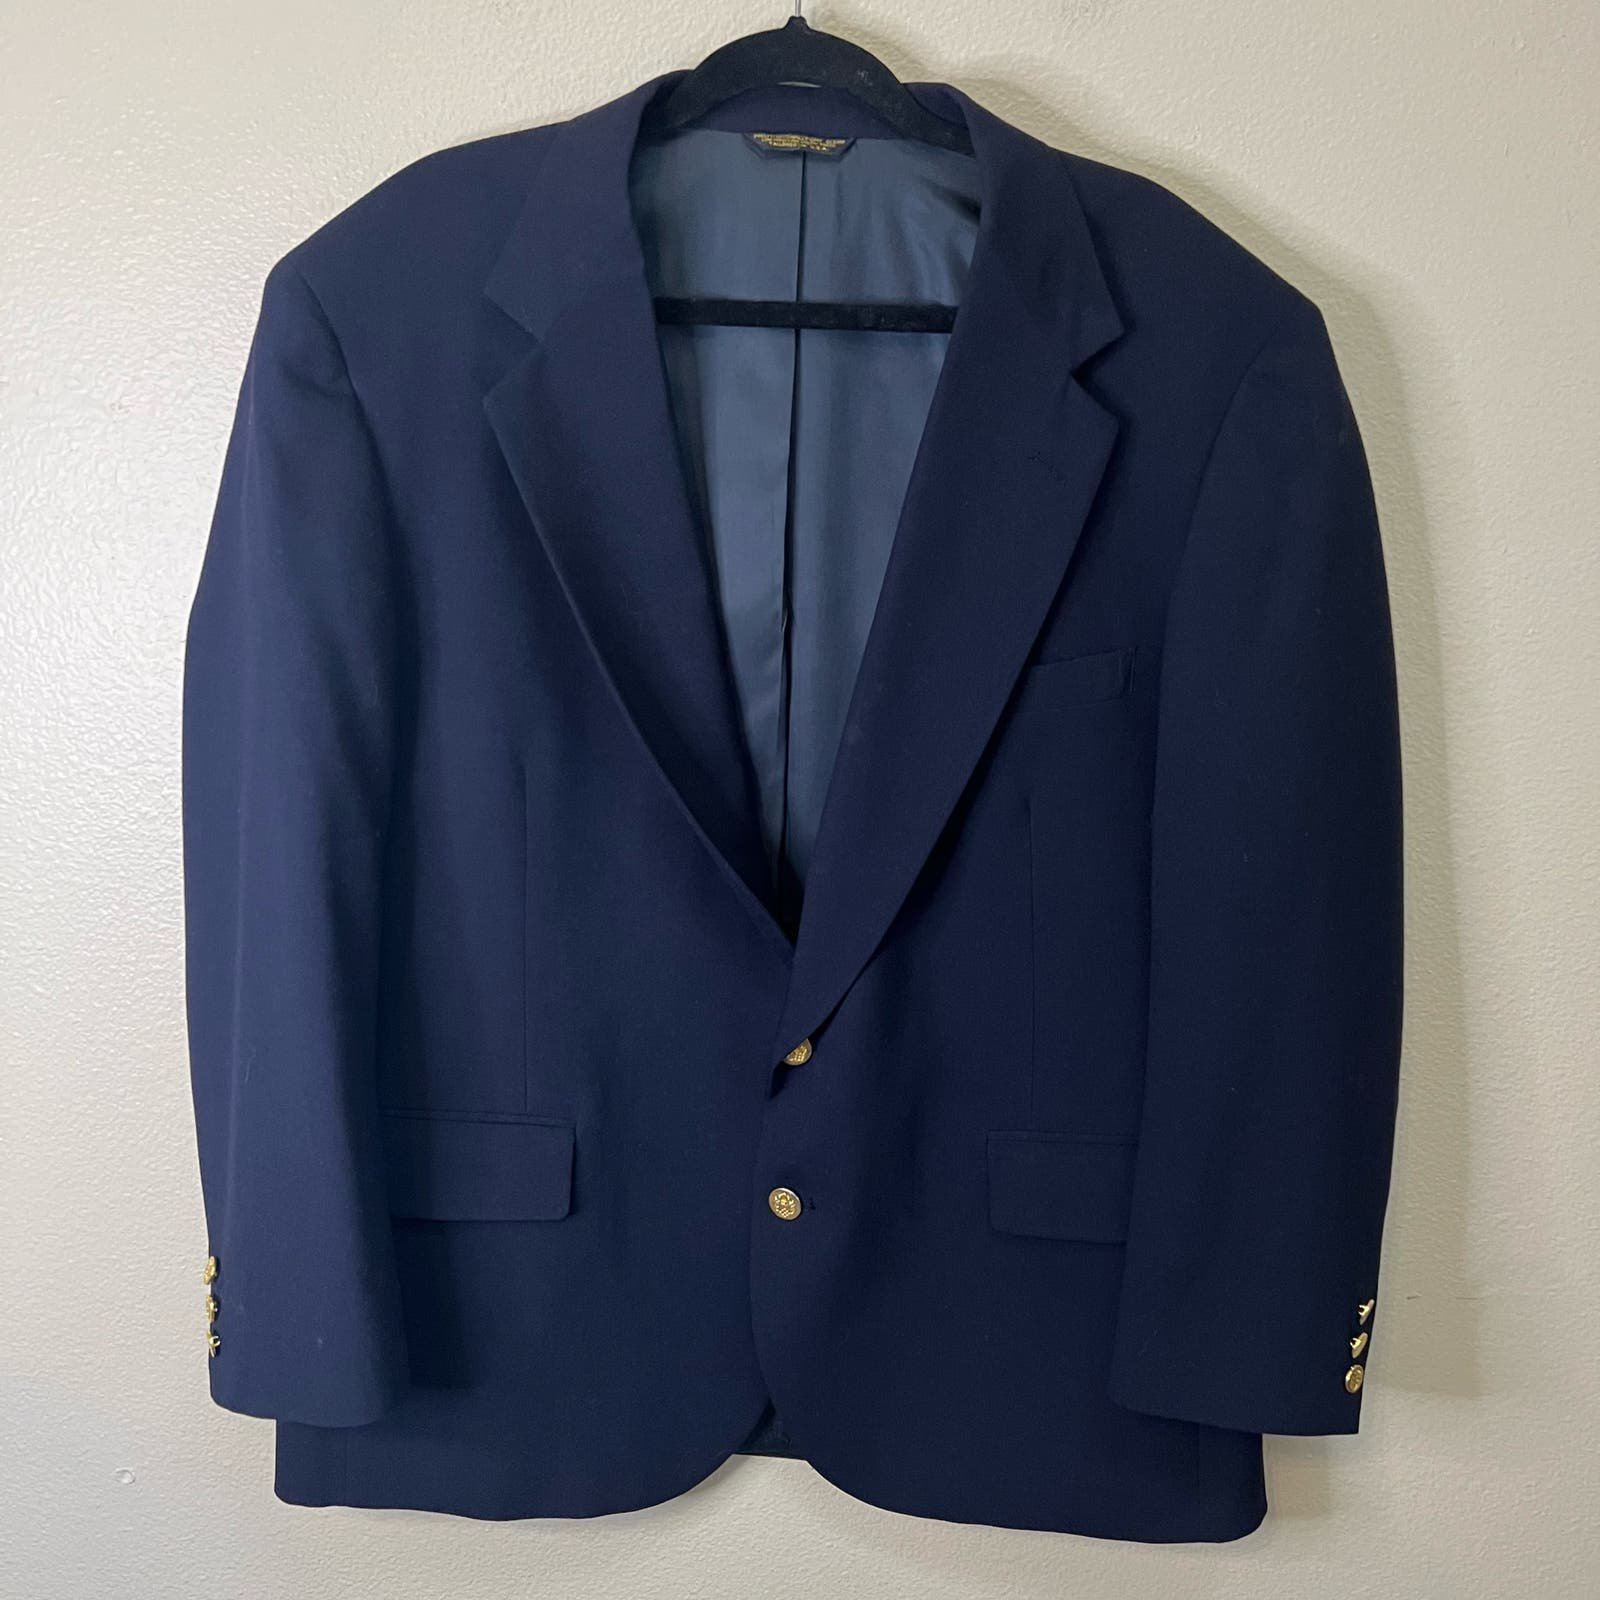 John Alexander Navy Blue Wool Suit Jacket Blazer qRmZjey3N